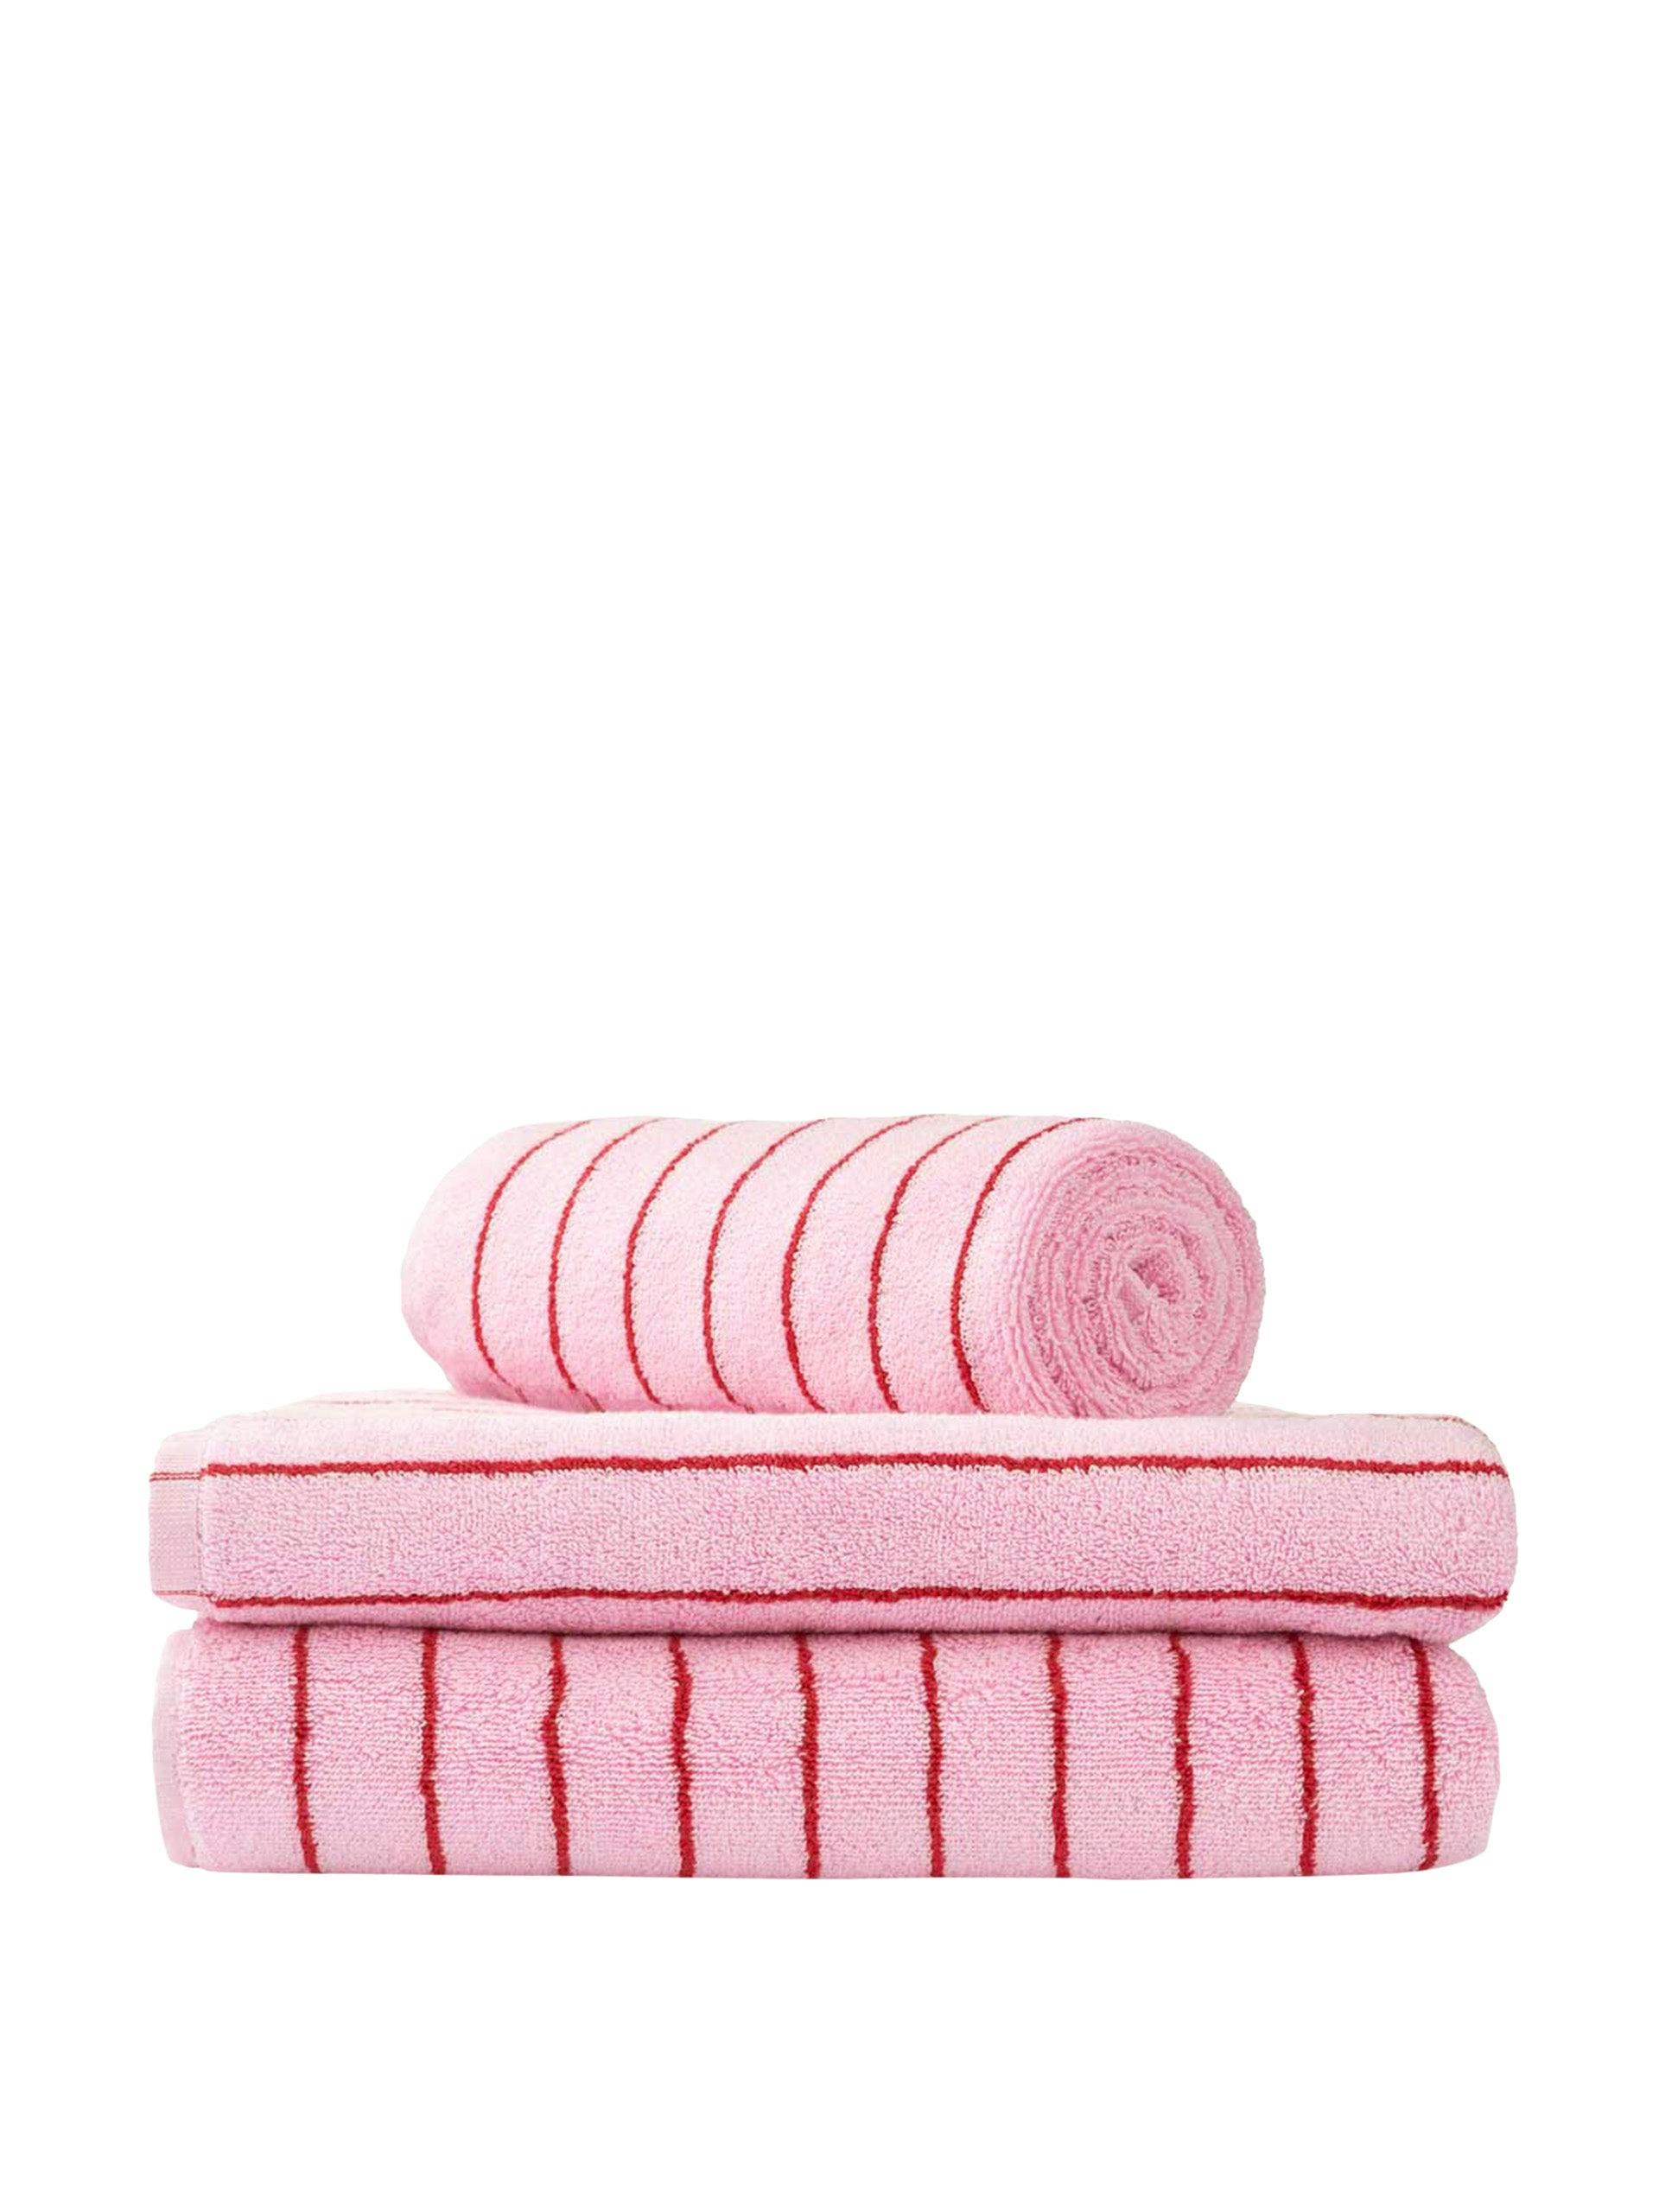 Naram bath towels